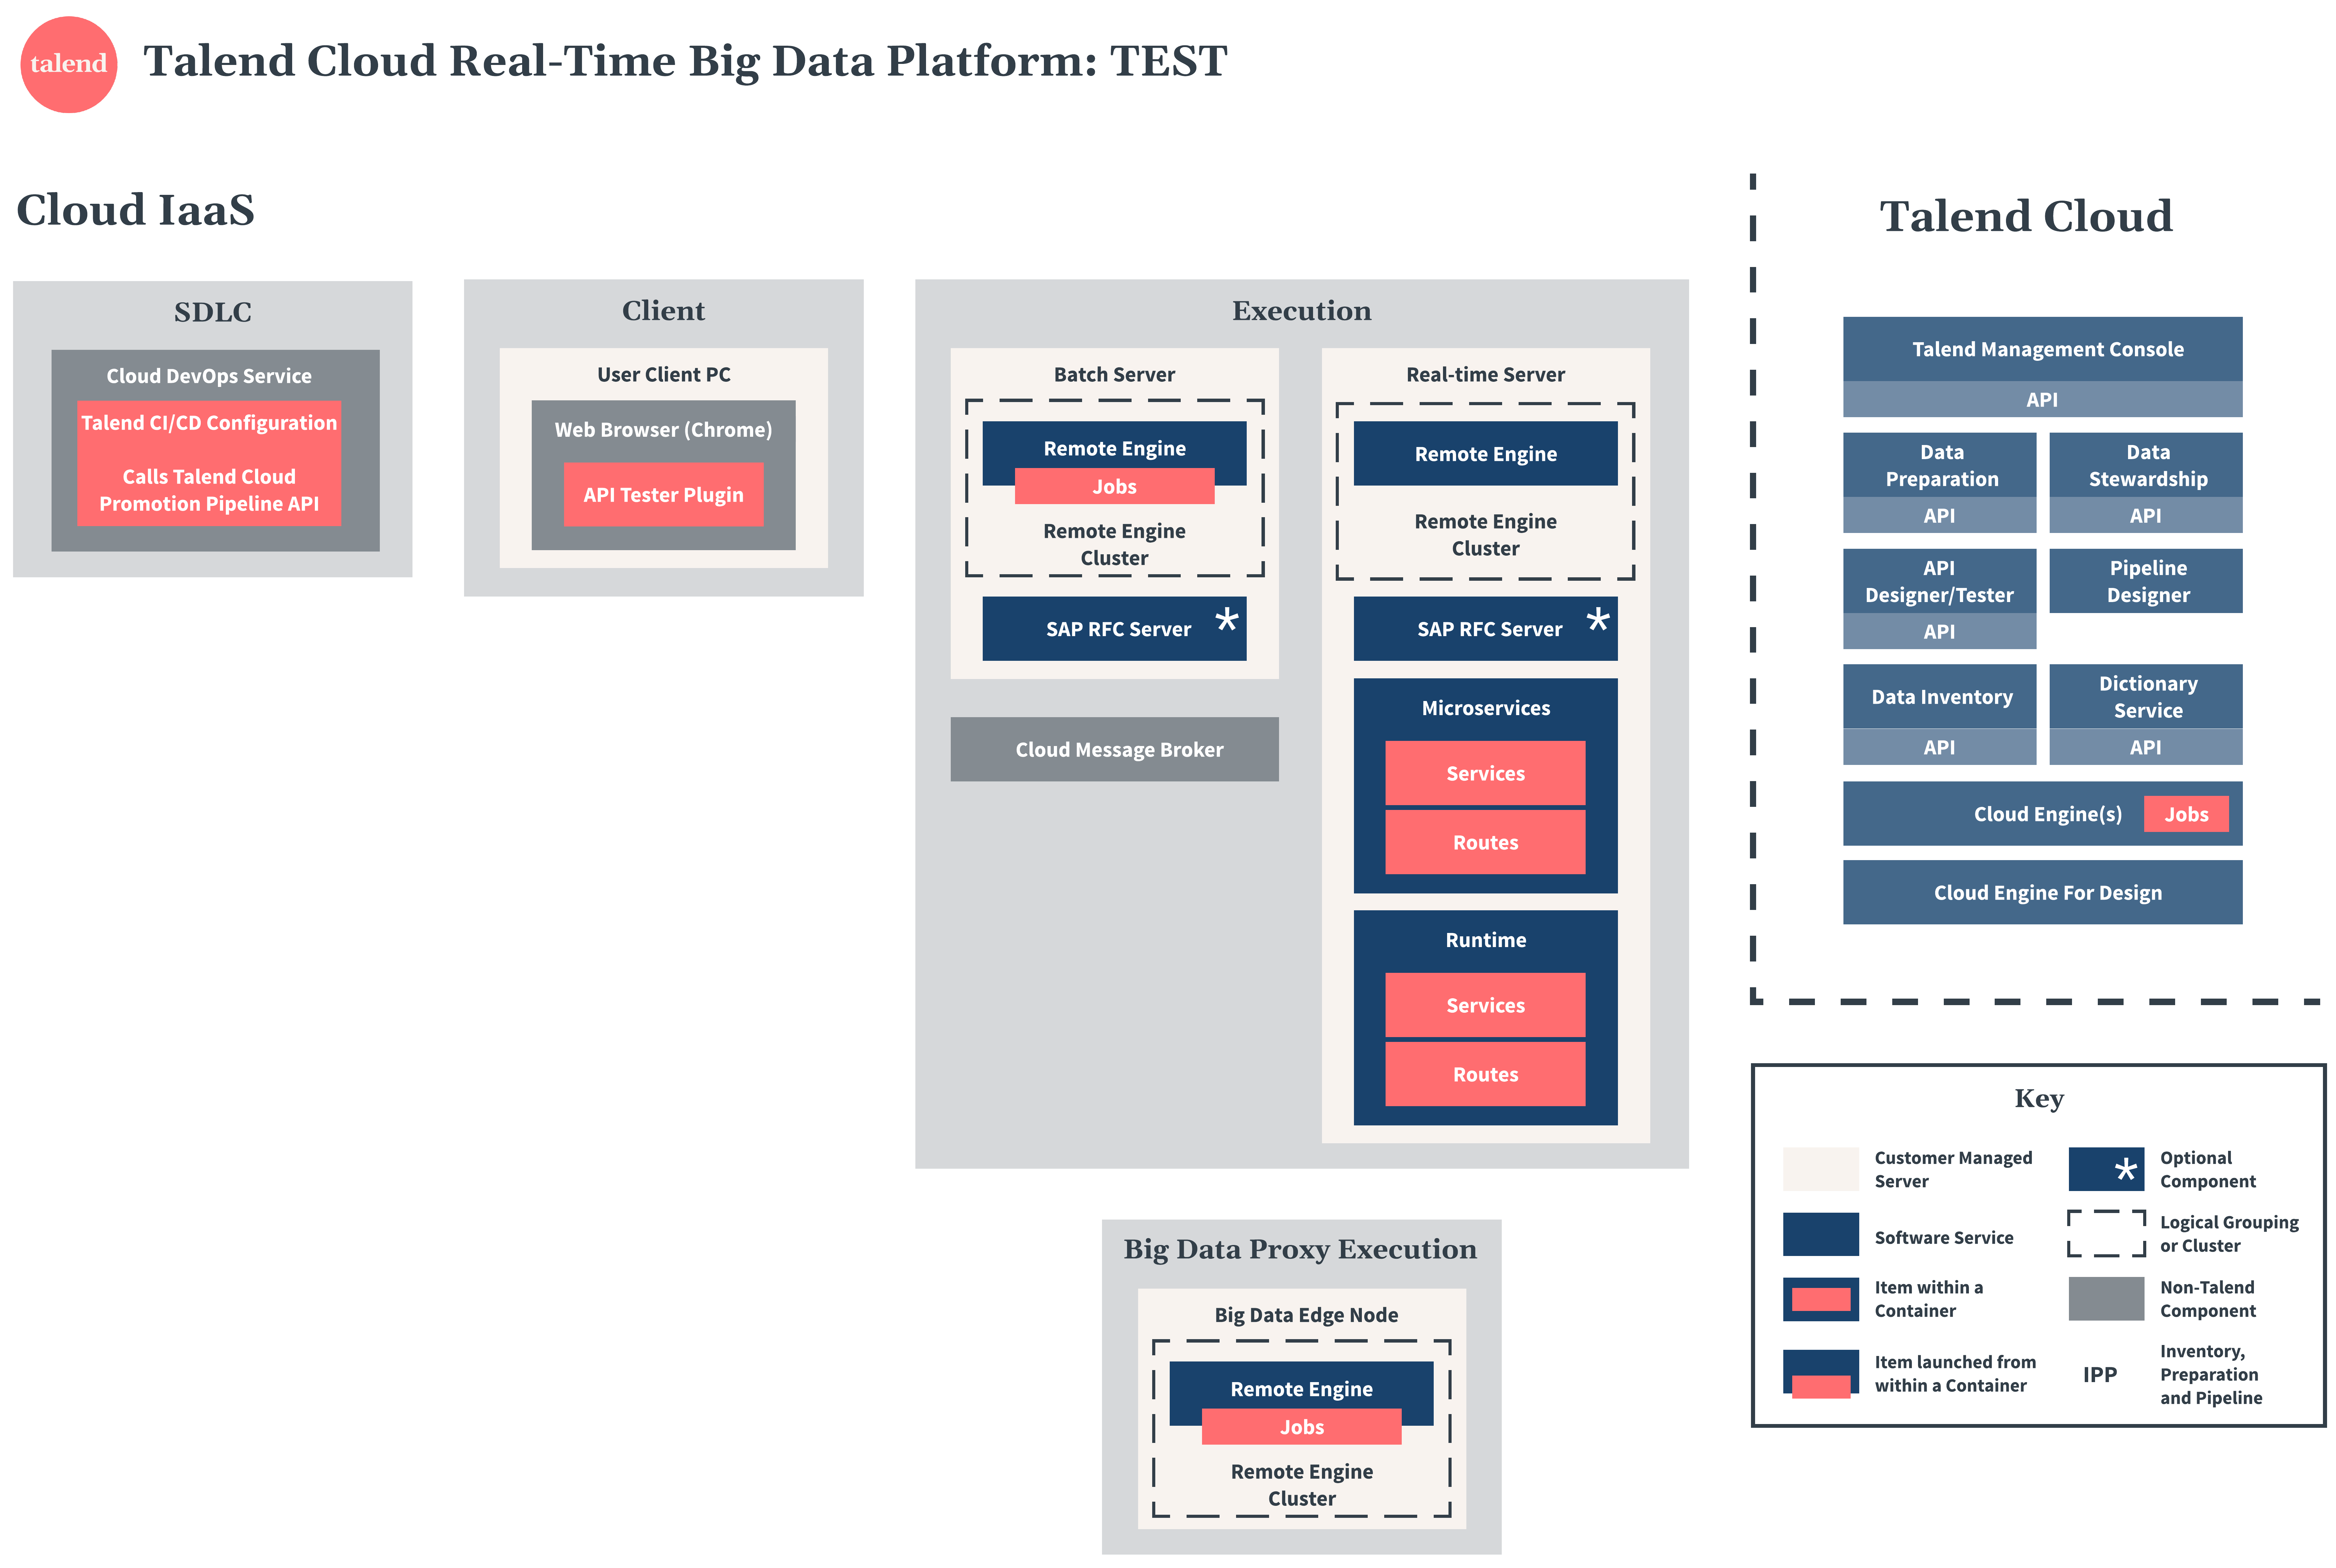 Talend Cloud Real-Time Big Data Platform test diagram.